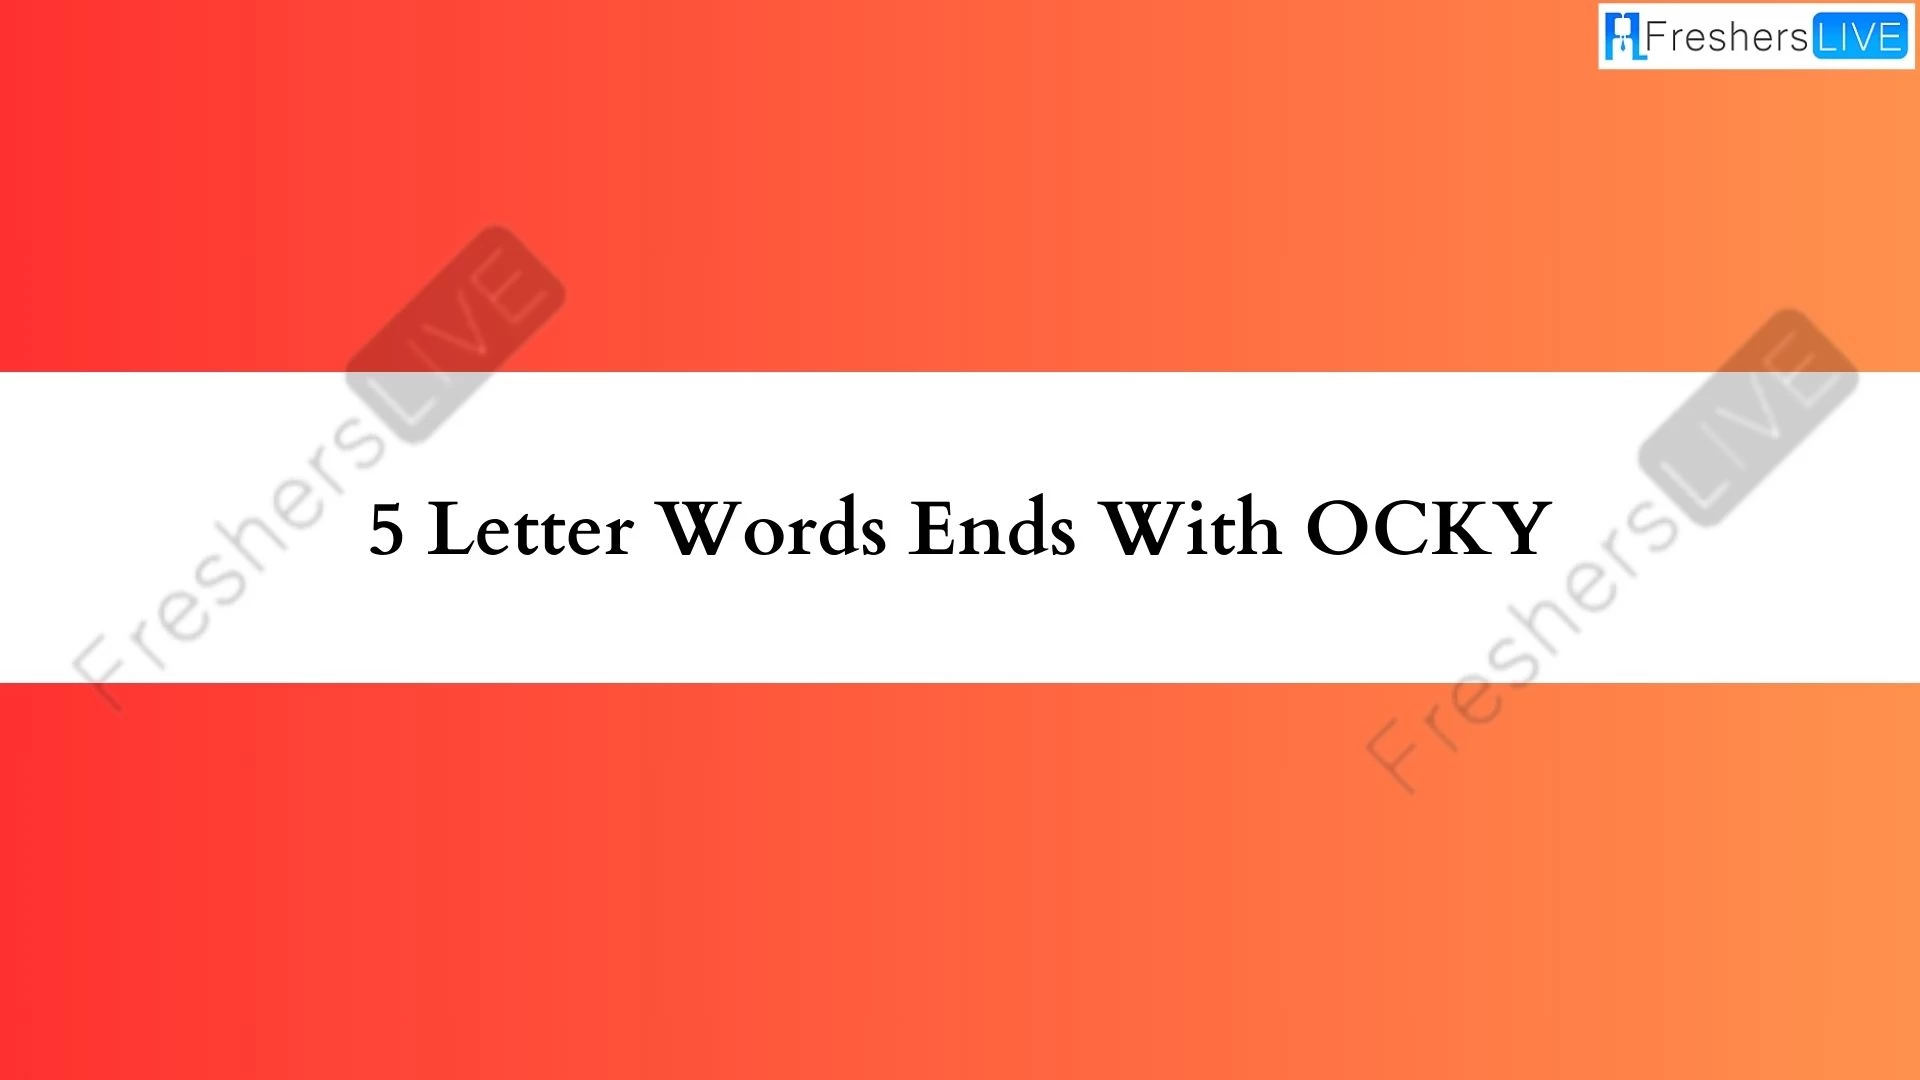 5 - Palabras con letras terminadas en OCKY Lista de todas las palabras